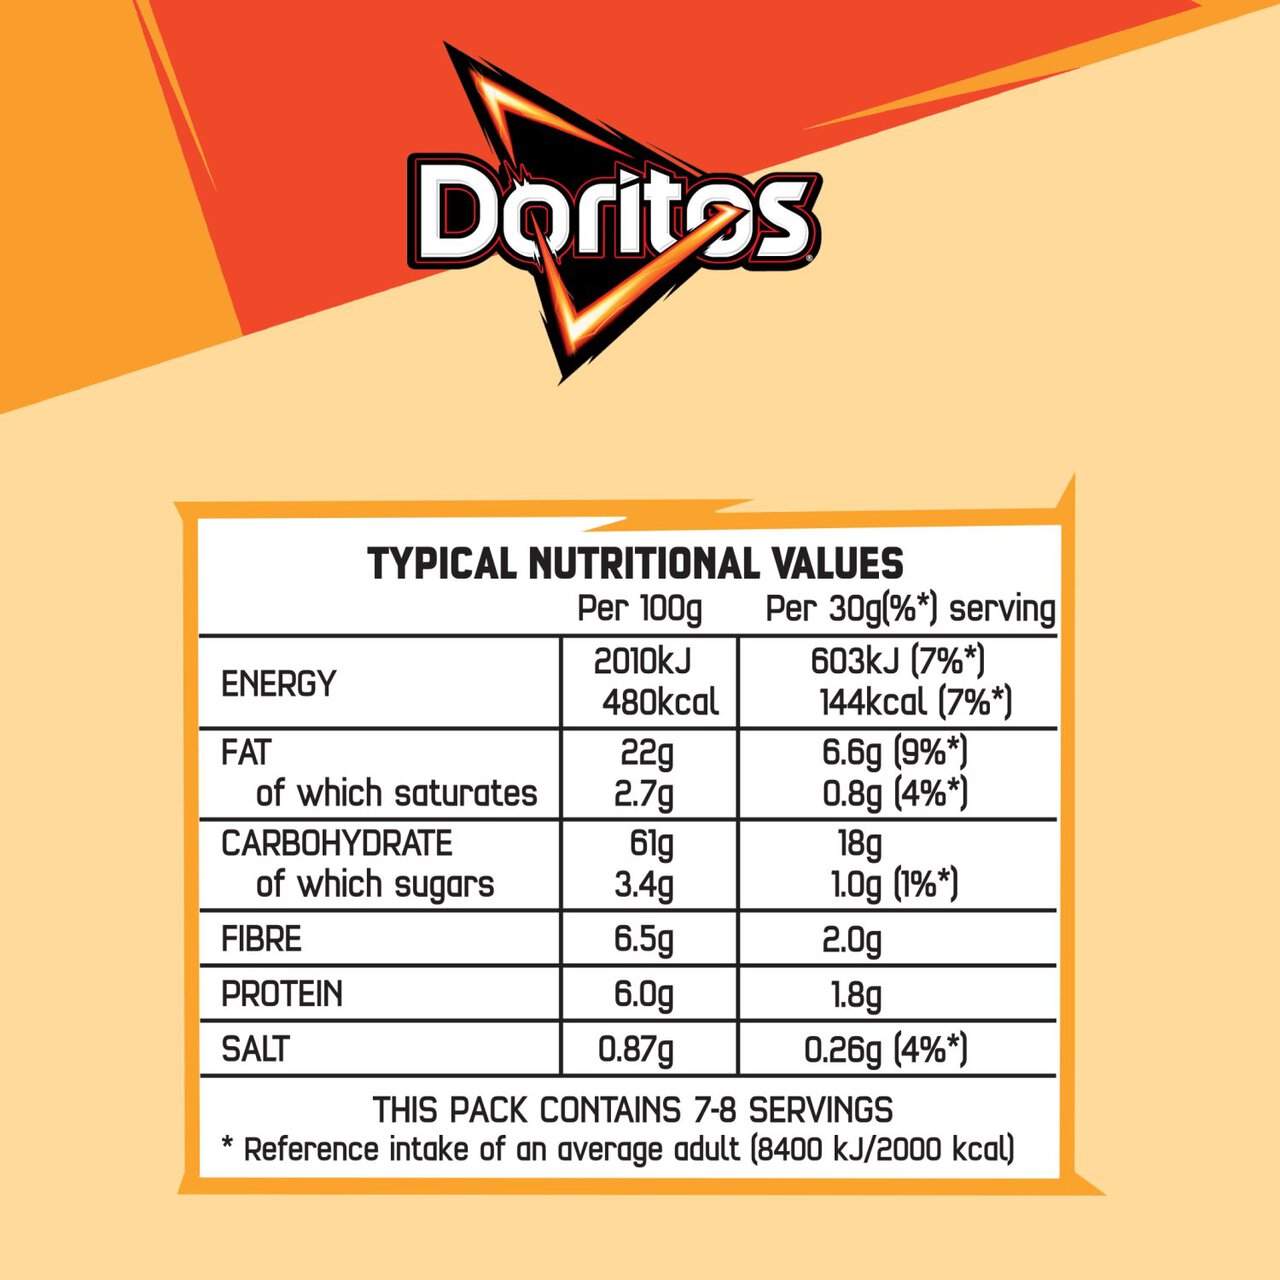 Doritos Dippers Hint of Paprika Tortilla Chips Sharing Bag Crisps 230g